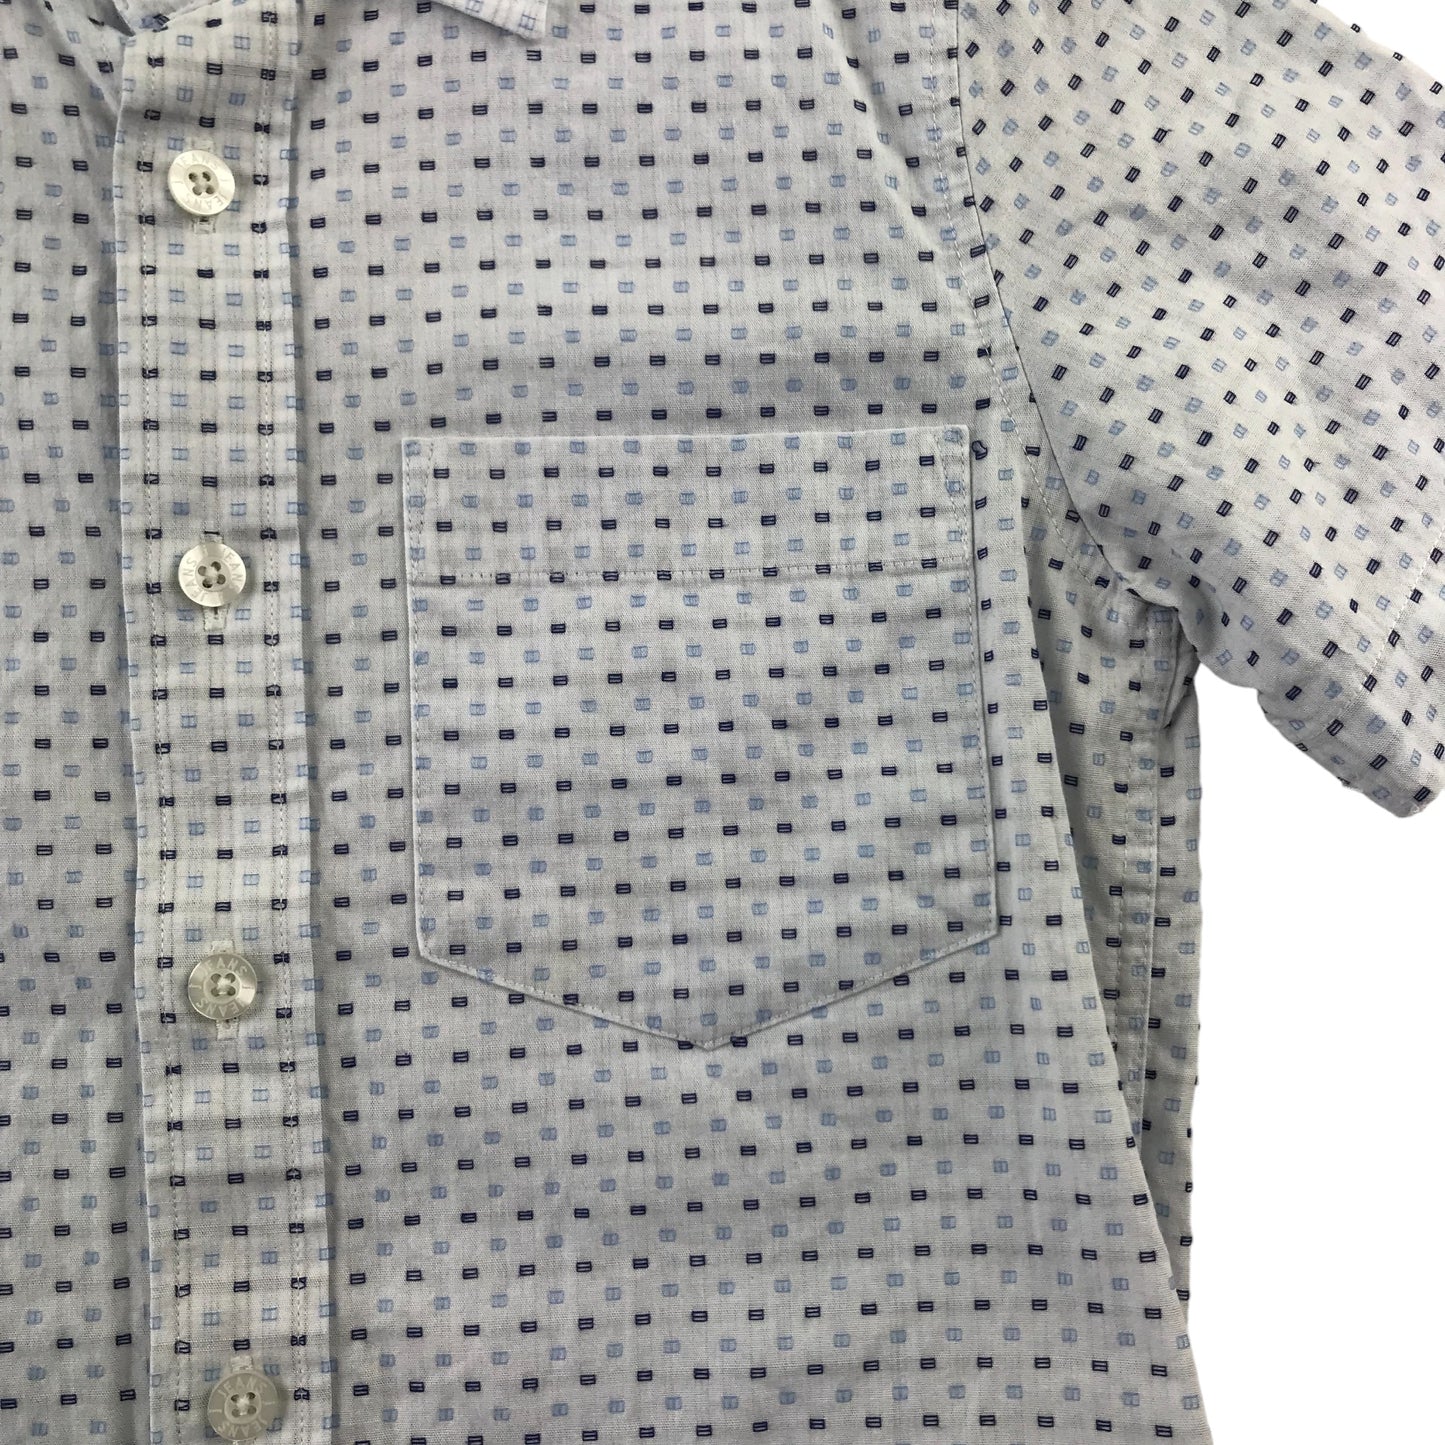 Jasper Conran Jeans Shirt Age 7 White Rectangle Print Short Sleeve Button Up Cotton